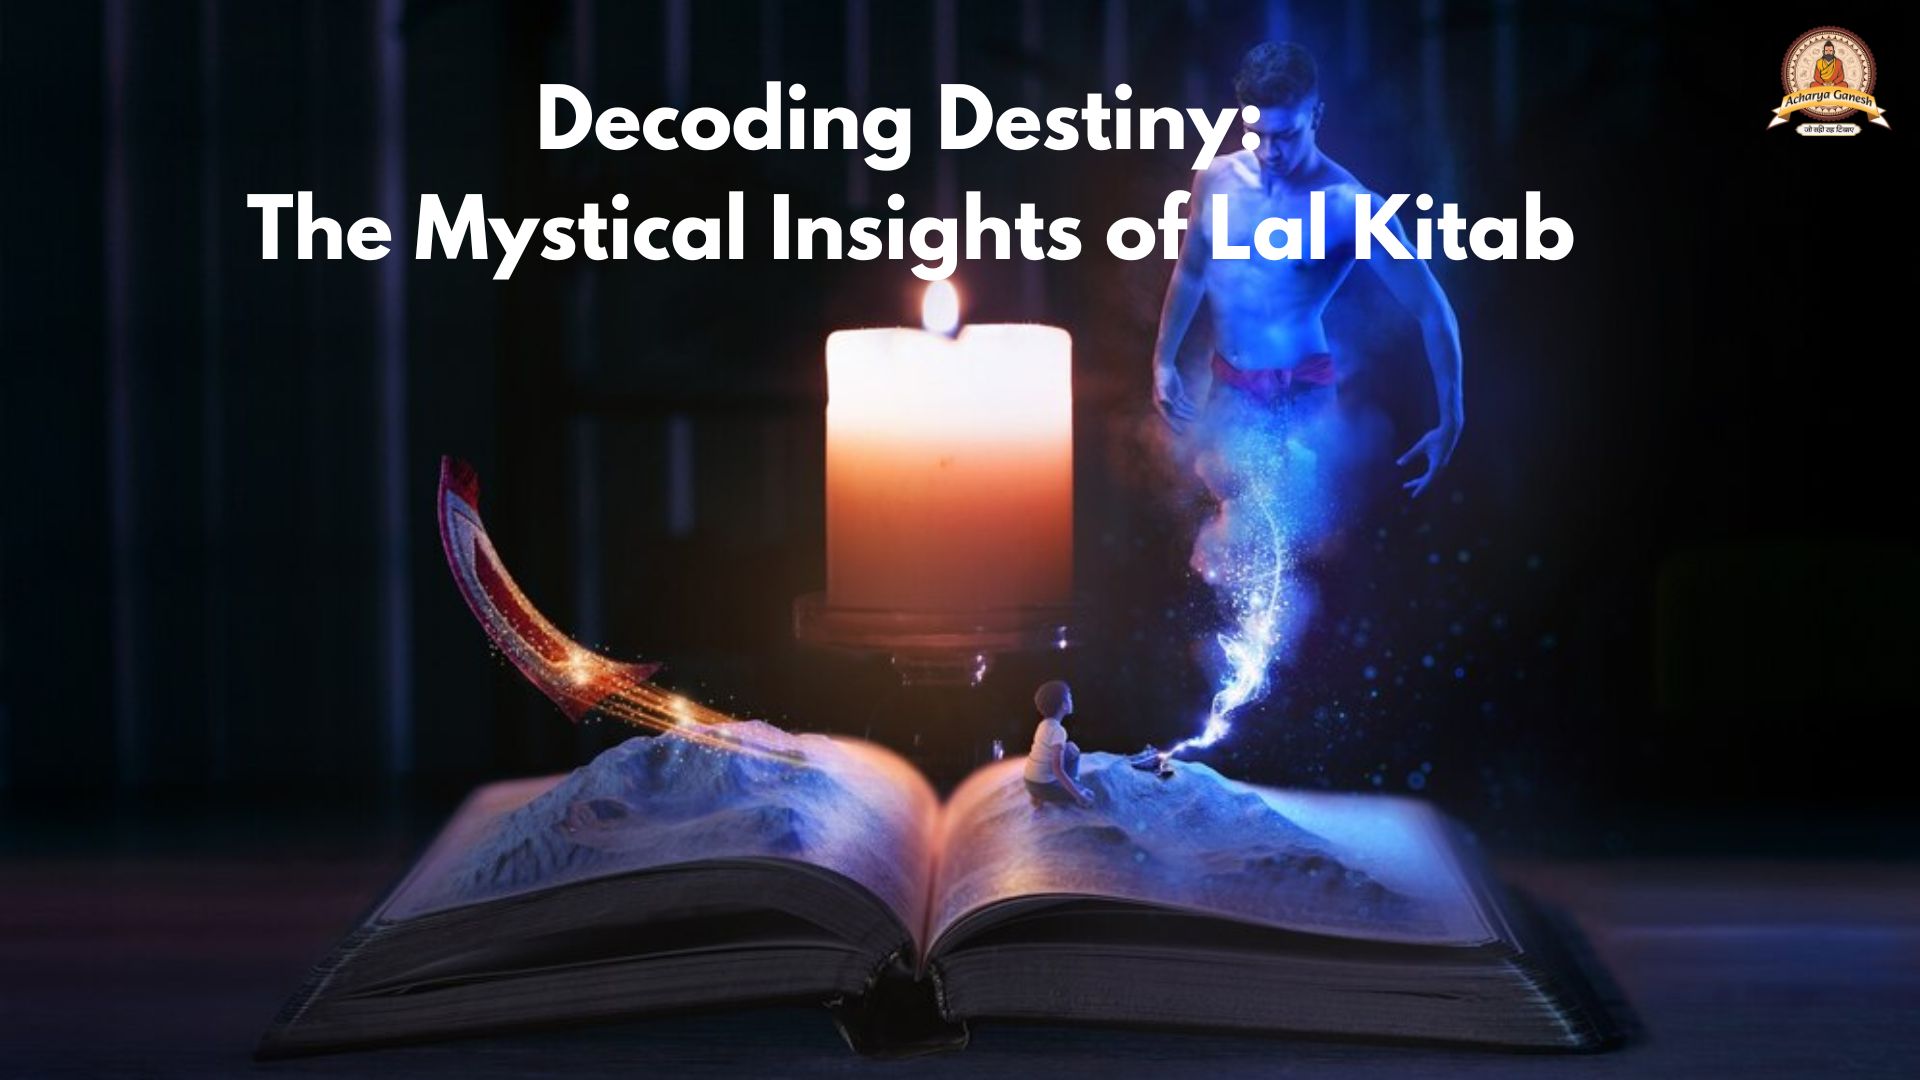  Decoding Destiny The Mystical Insights of Lal Kitab - Uttar Pradesh - Noida ID1522502